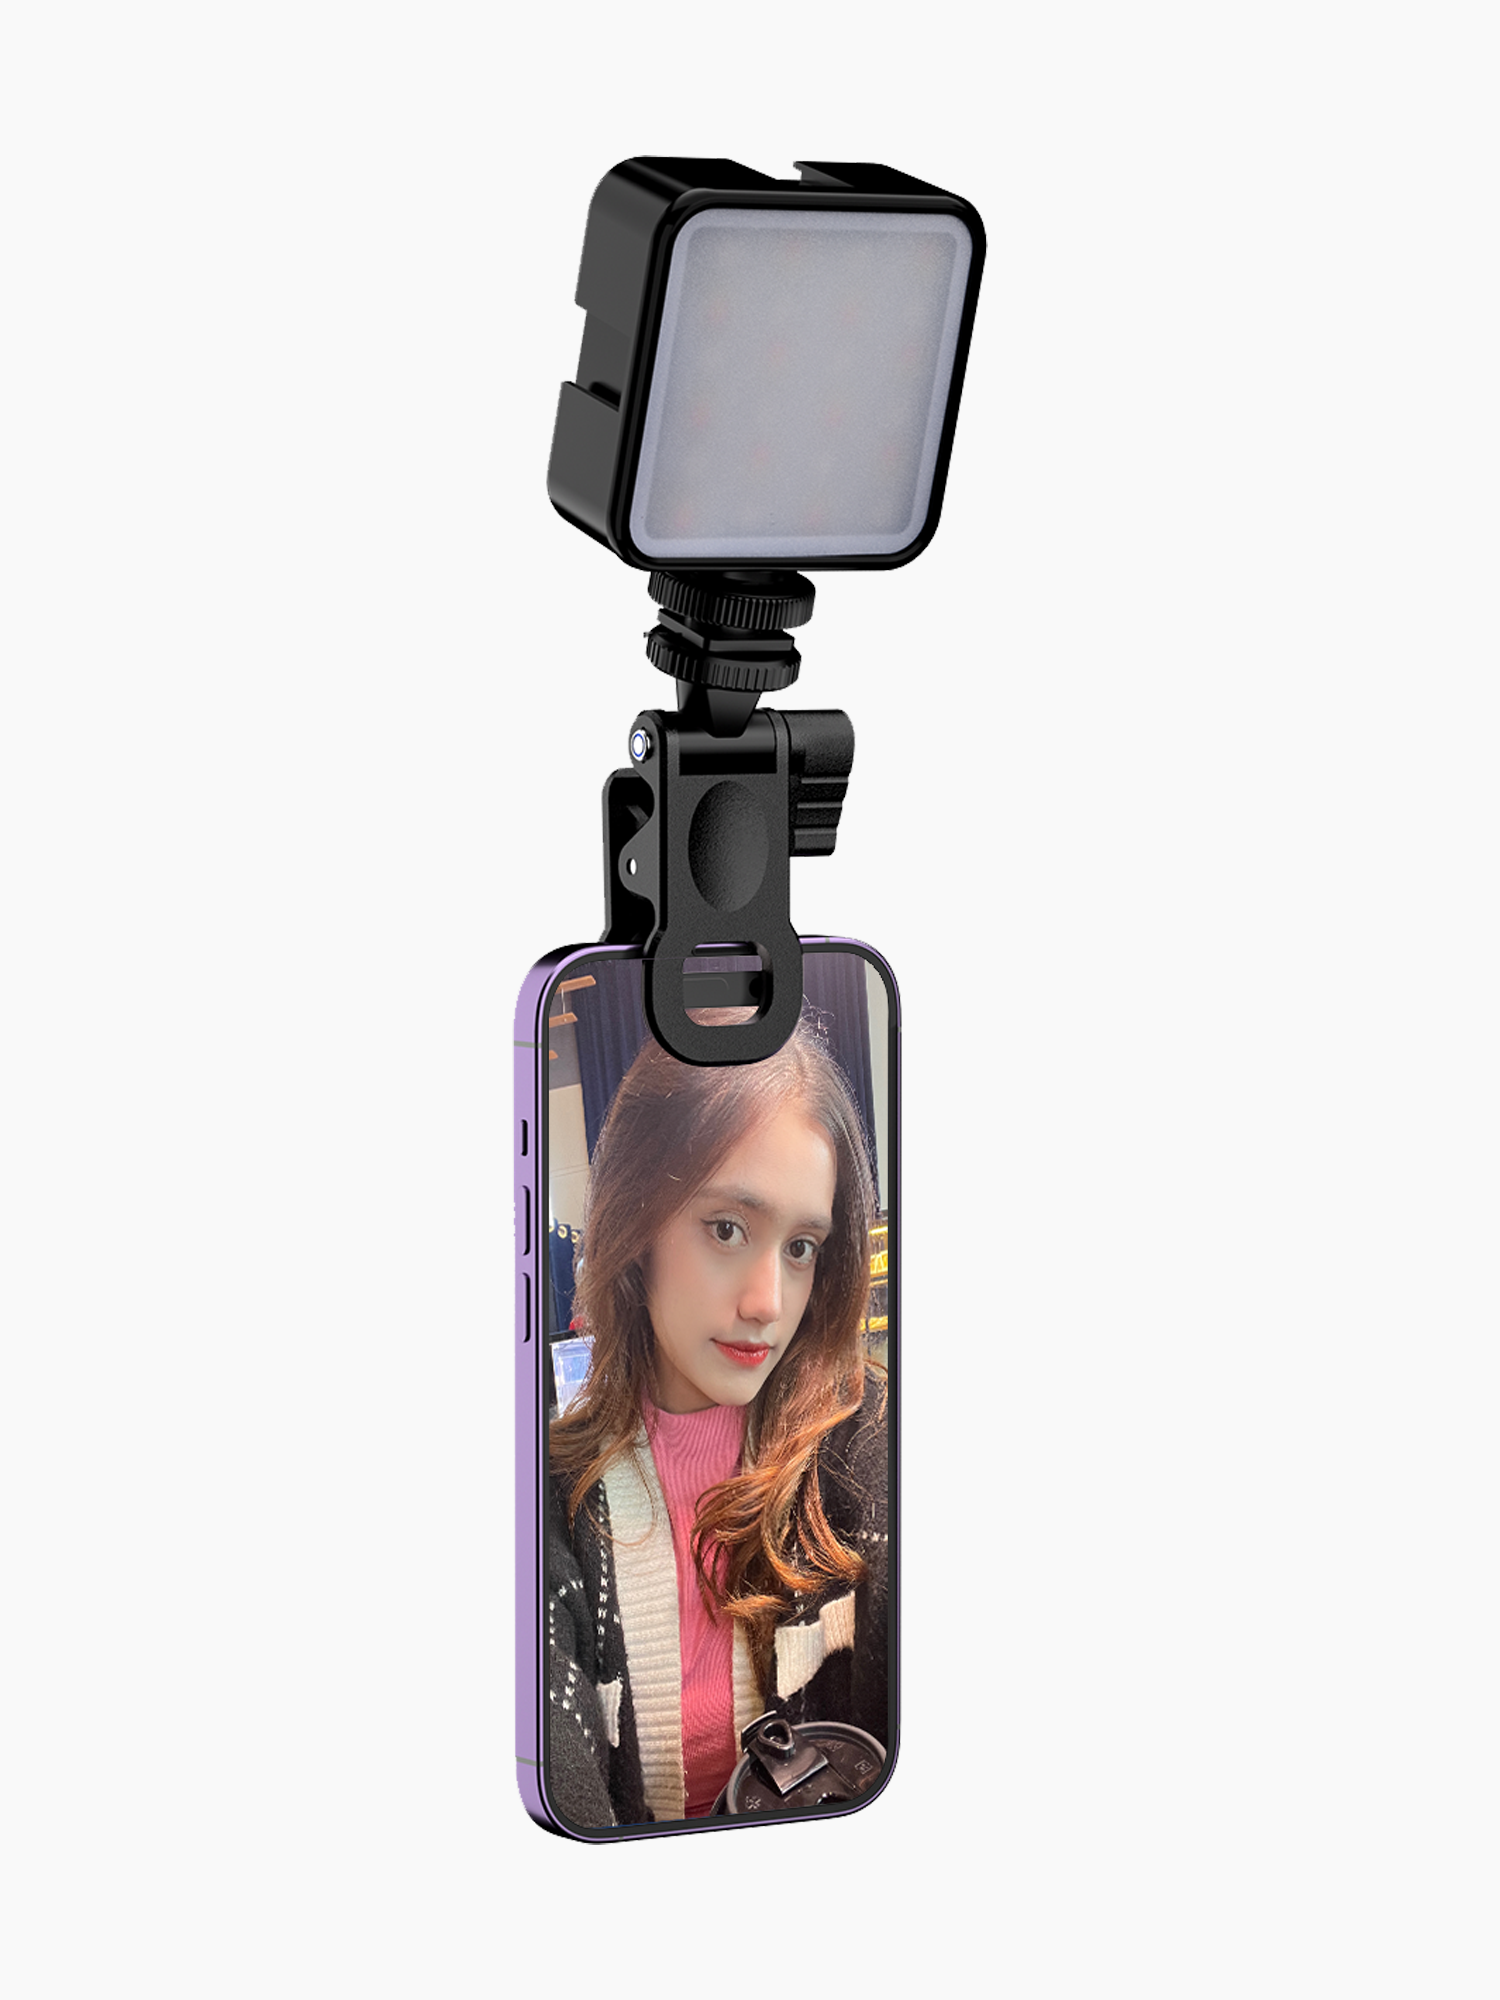 PIXEL S1 RGB Selfie Light